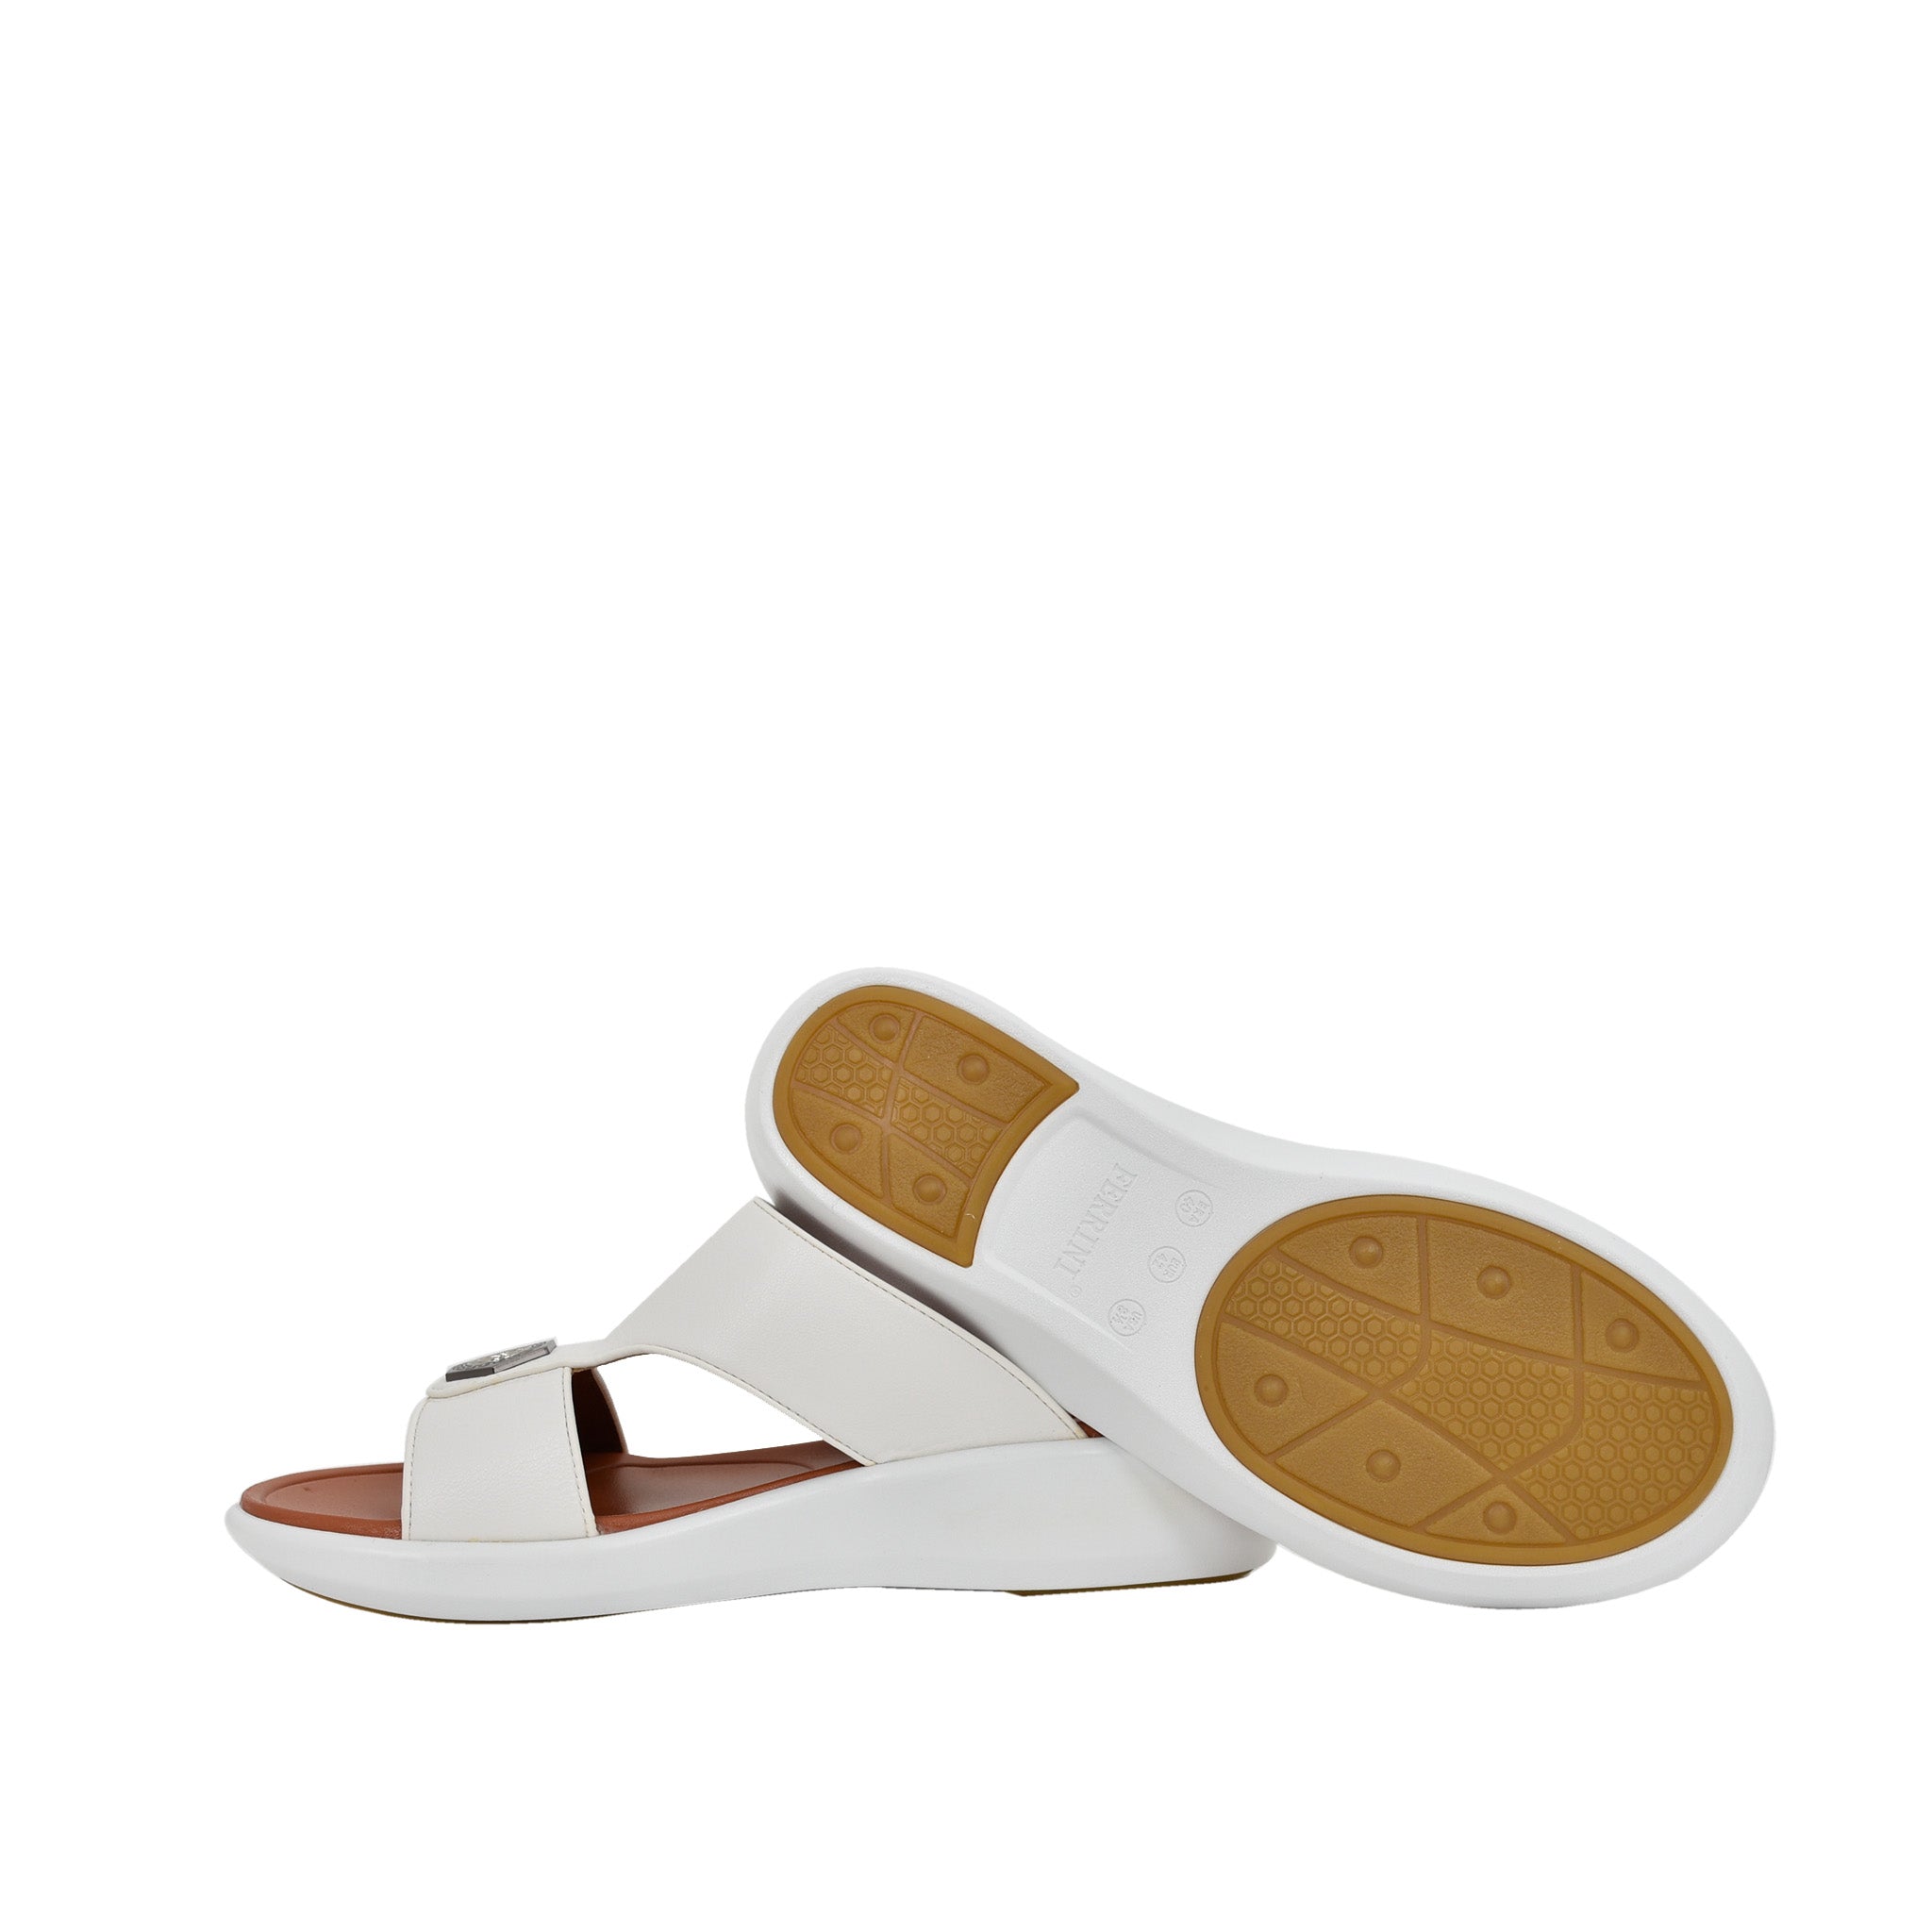 Buy Sandals with glittery straps Online in Dubai & the UAE|Kiabi